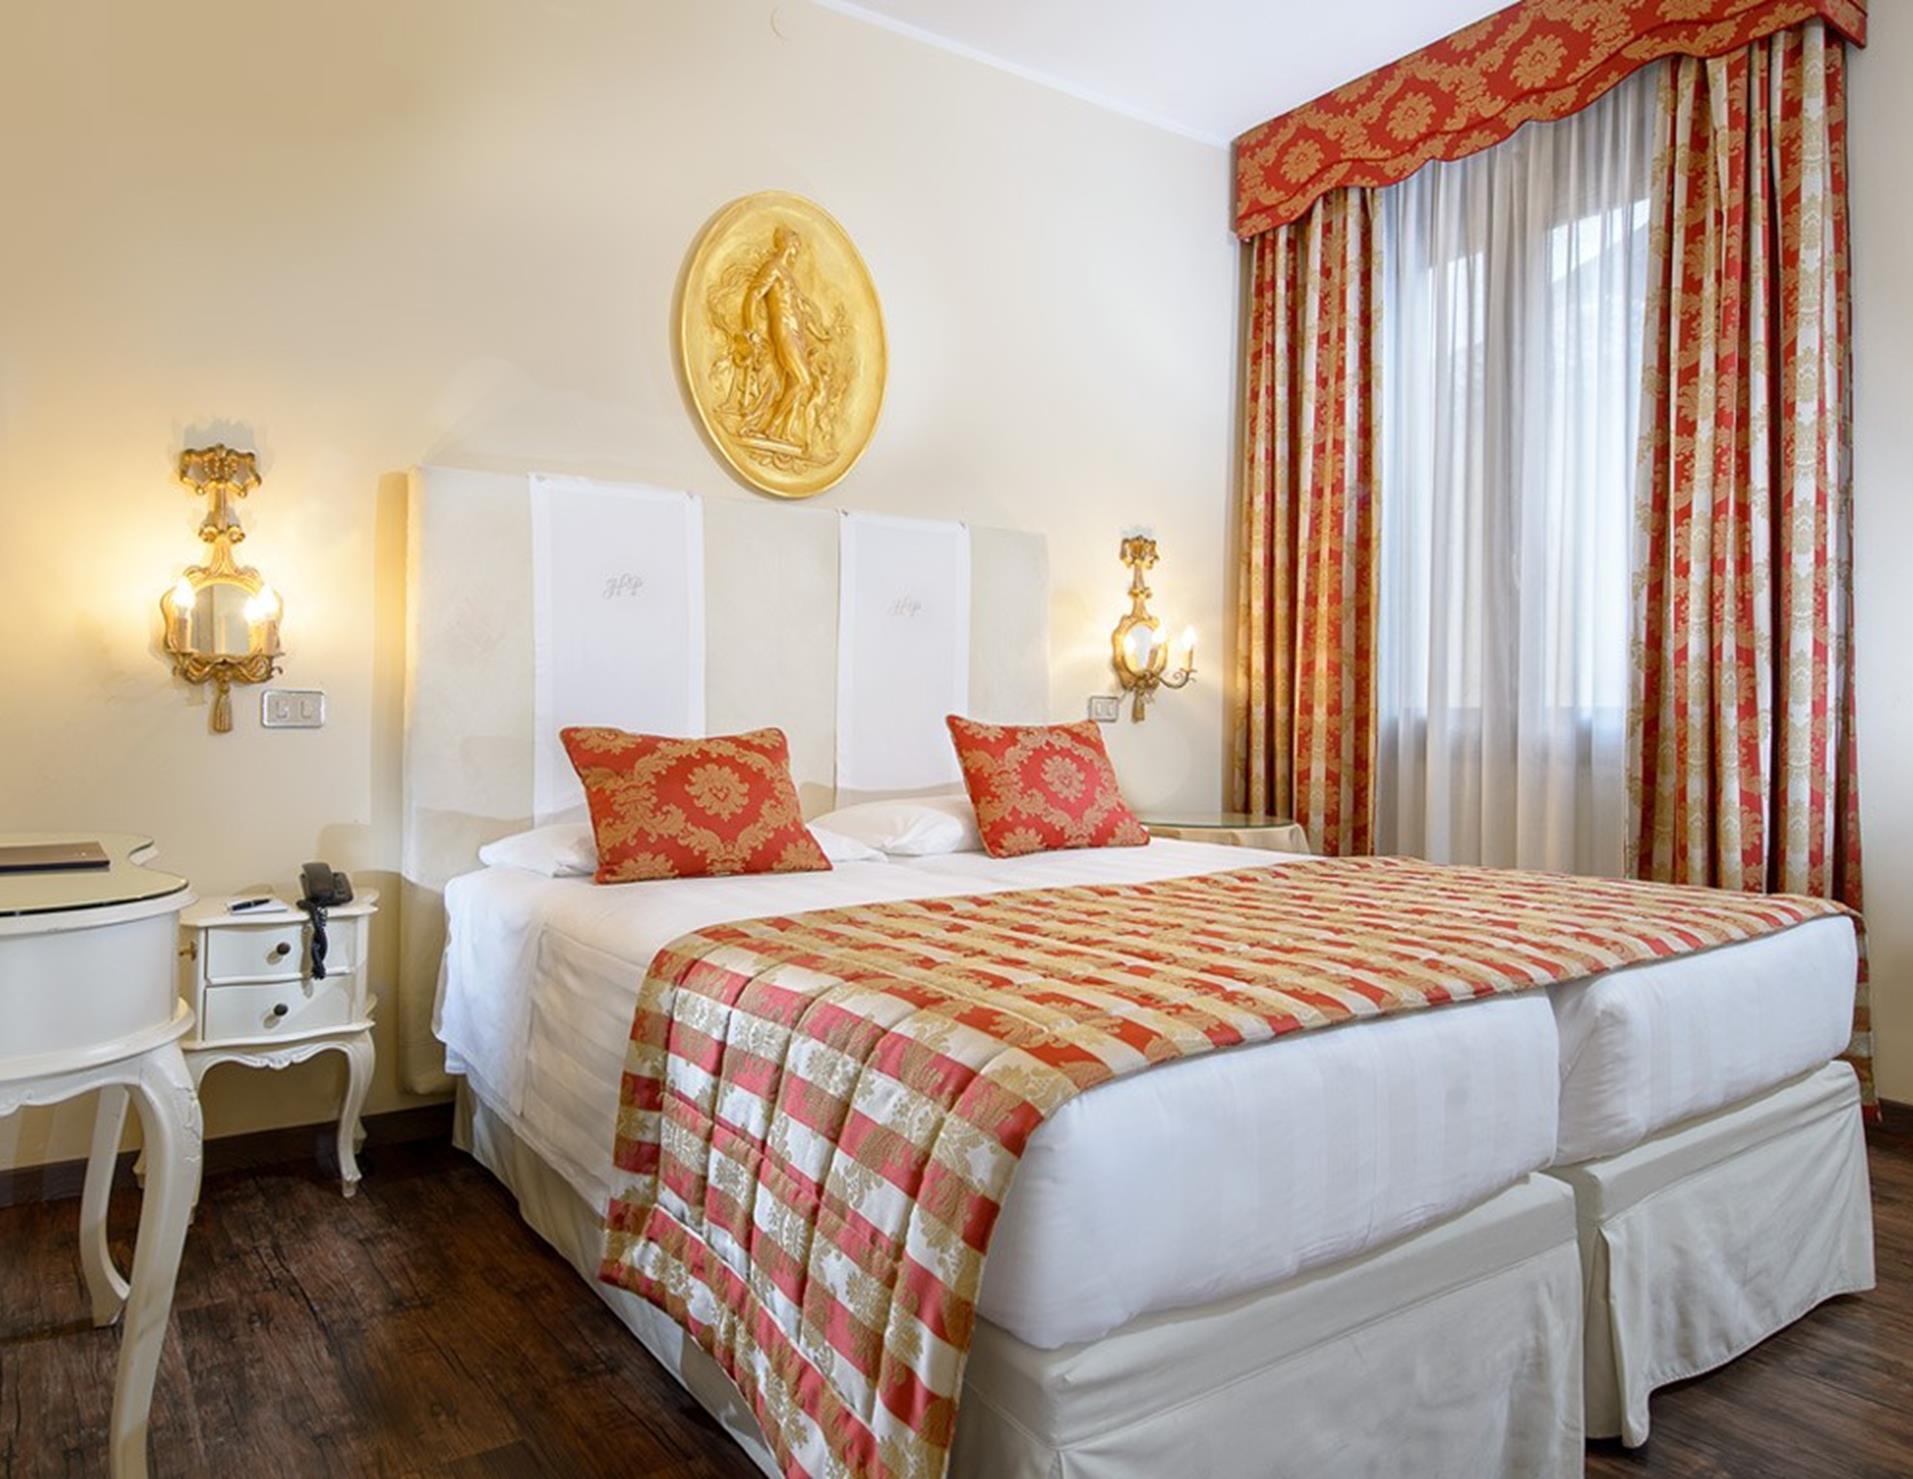 Hotel Principe - Room 1